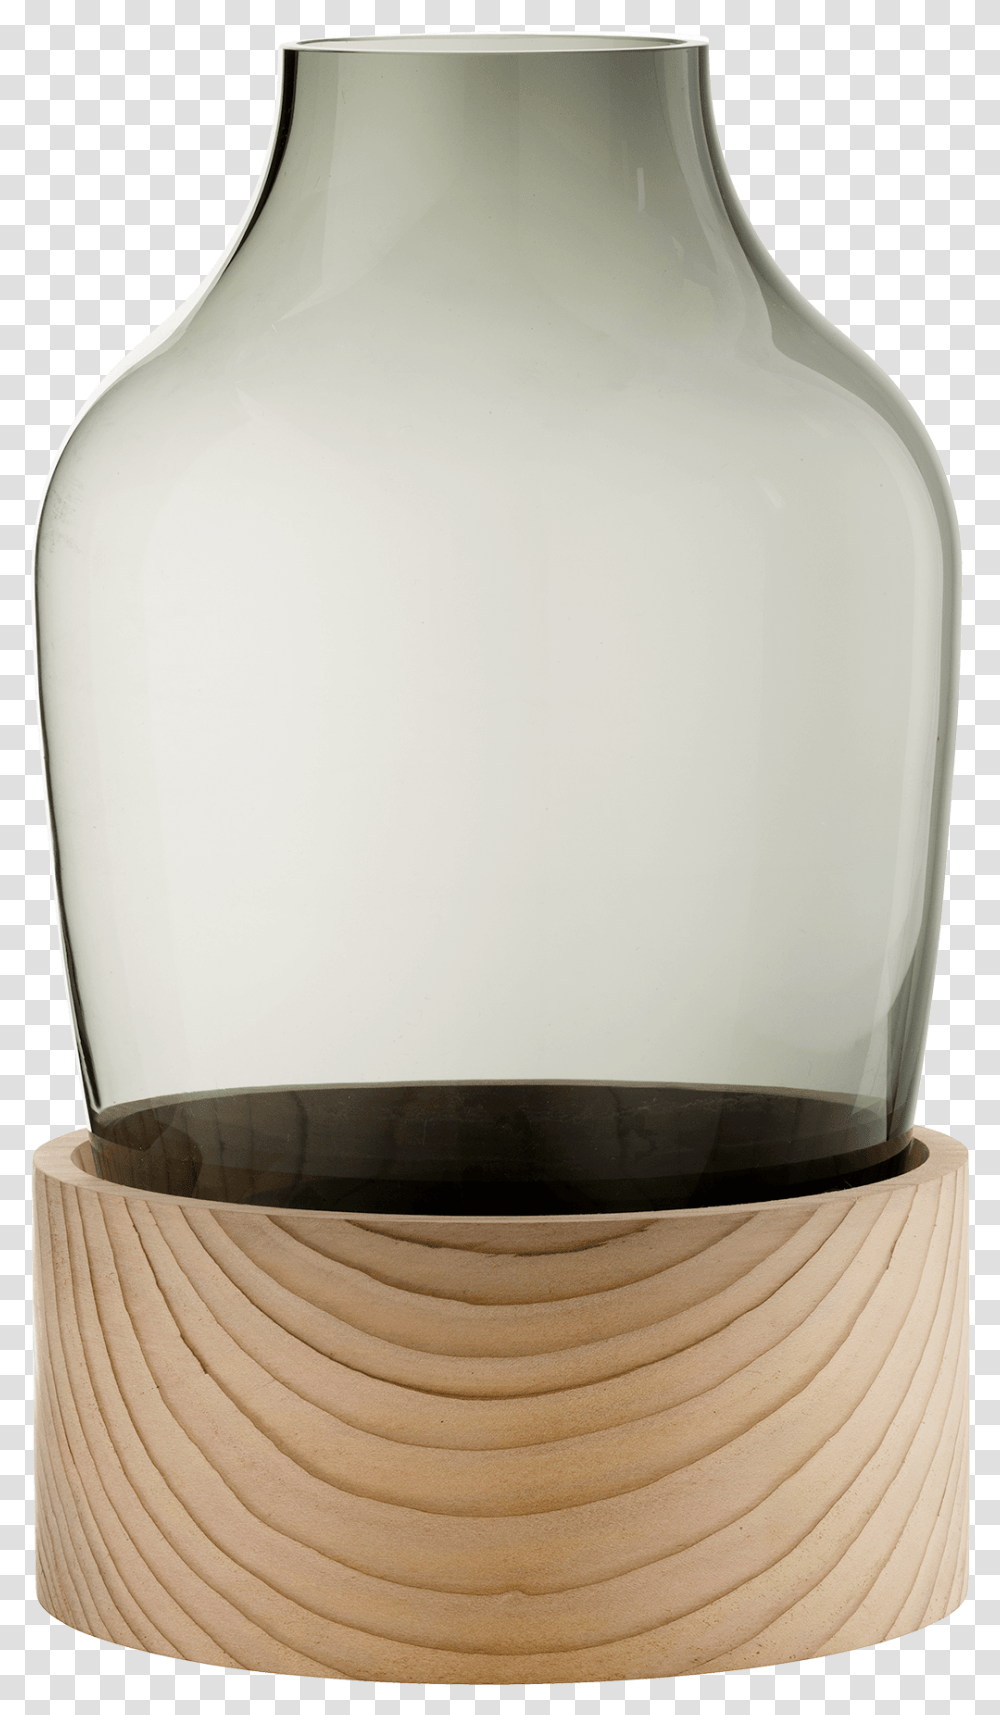 Fritz Hansen Accessories Jaime Hayon Vase High Vase Fritz Hansen, Lamp, Jar, Furniture Transparent Png